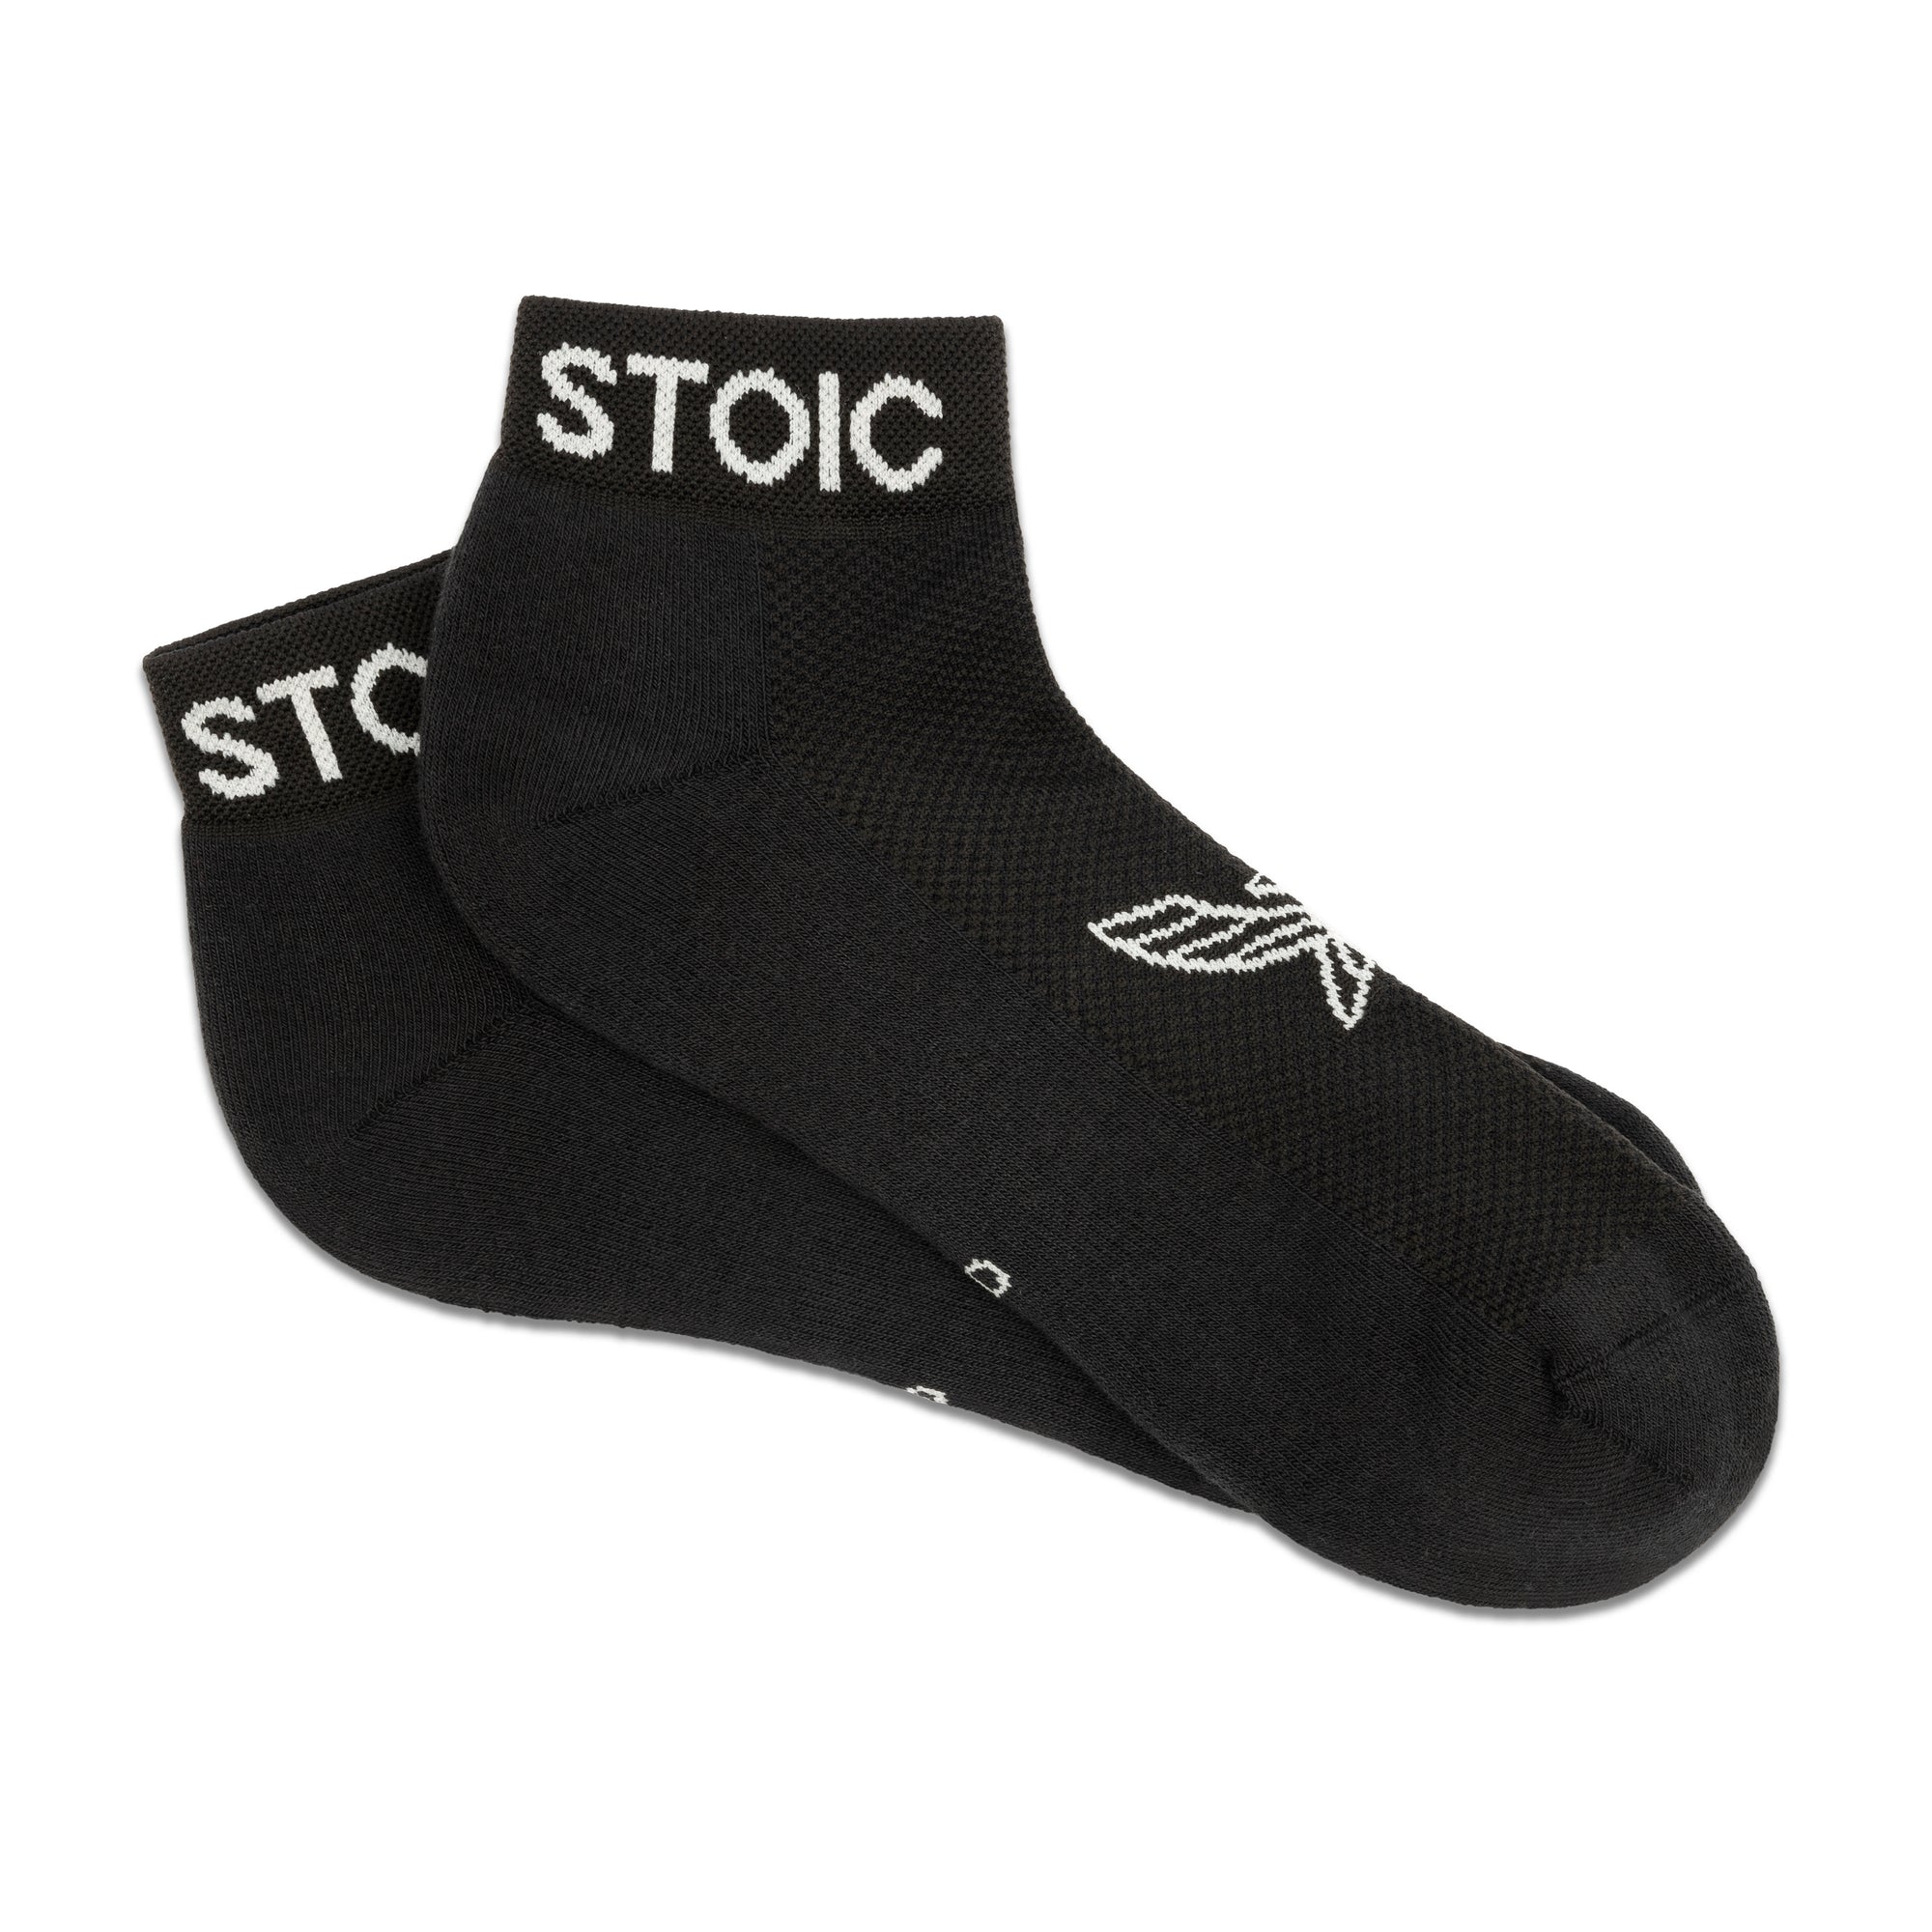 Stoic Socks 2.0